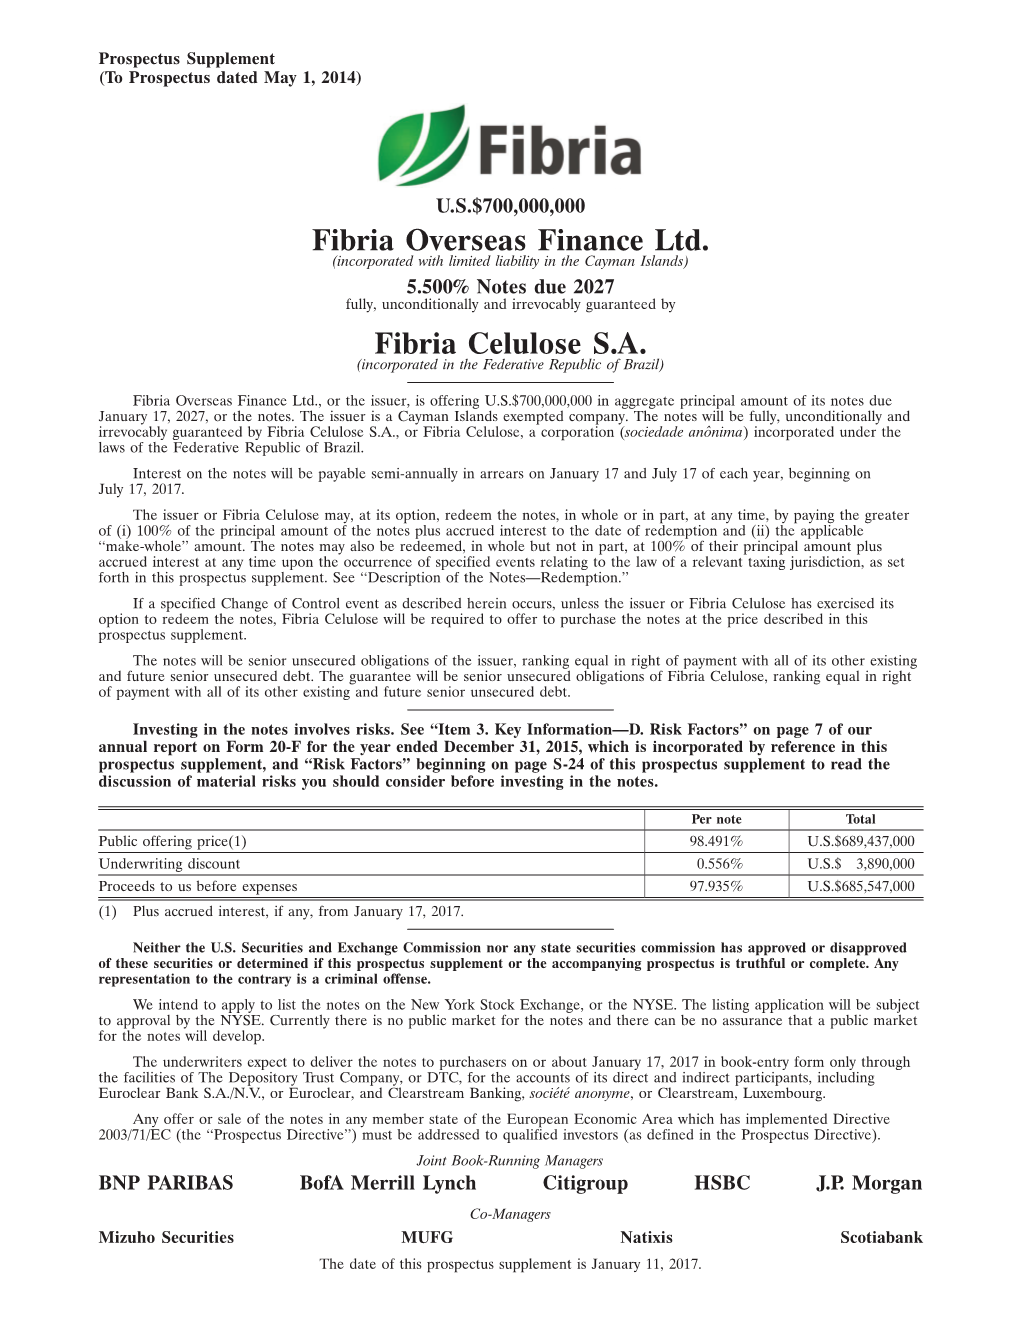 Fibria28mar201222001999 U.S.$700,000,000 Fibria Overseas Finance Ltd